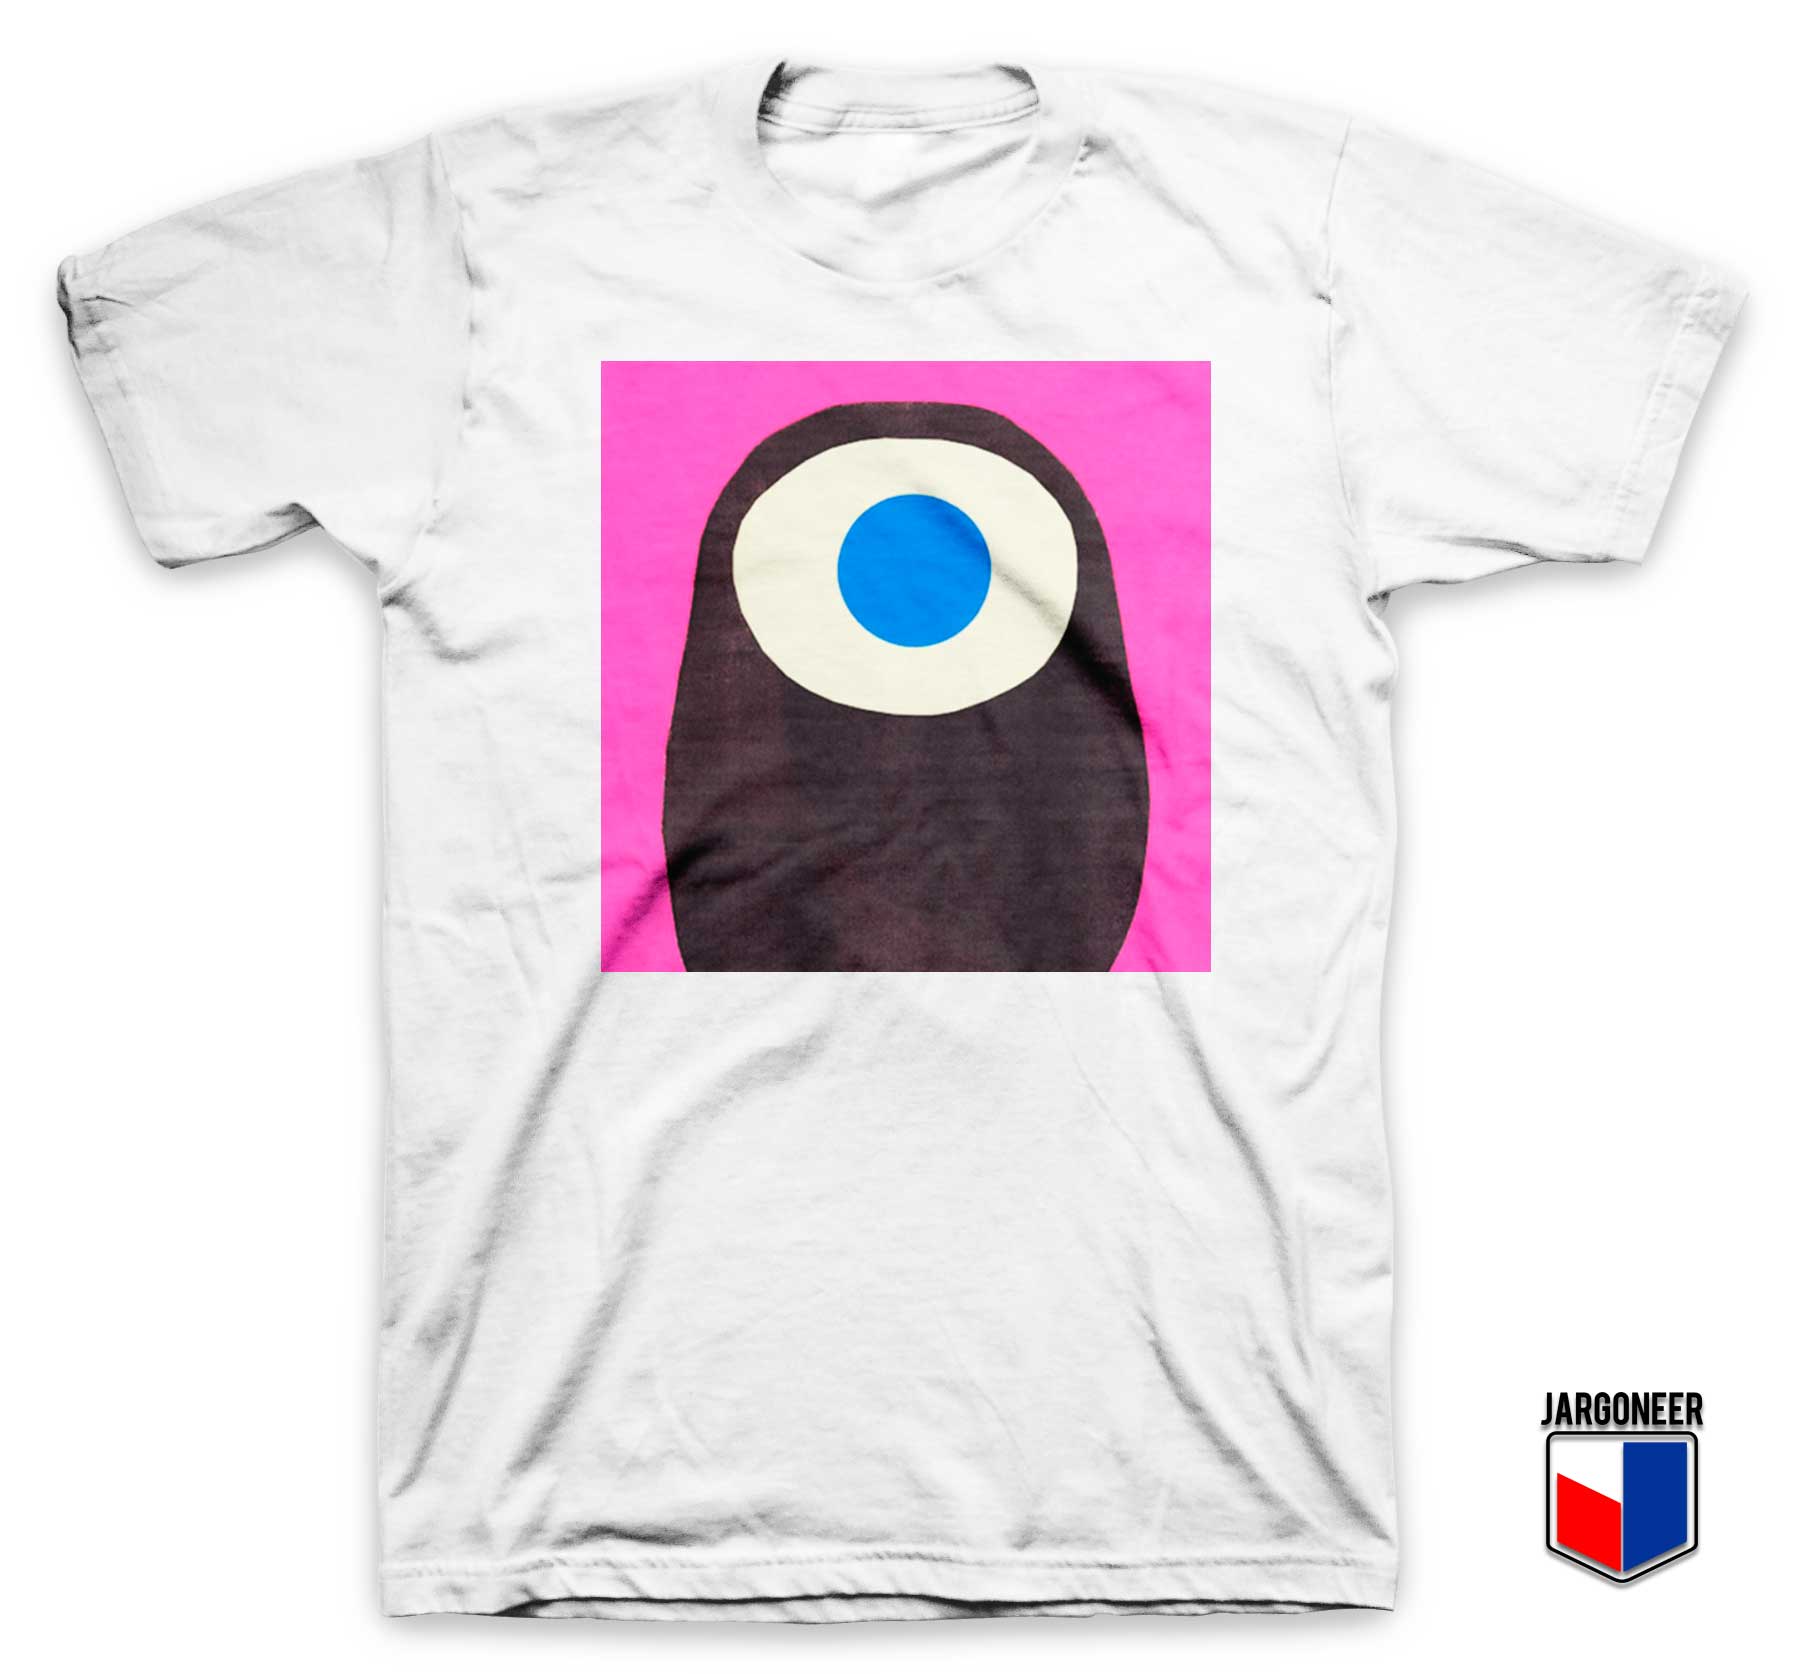 Vanishing Twin on Apple Music White T Shirt - Shop Unique Graphic Cool Shirt Designs